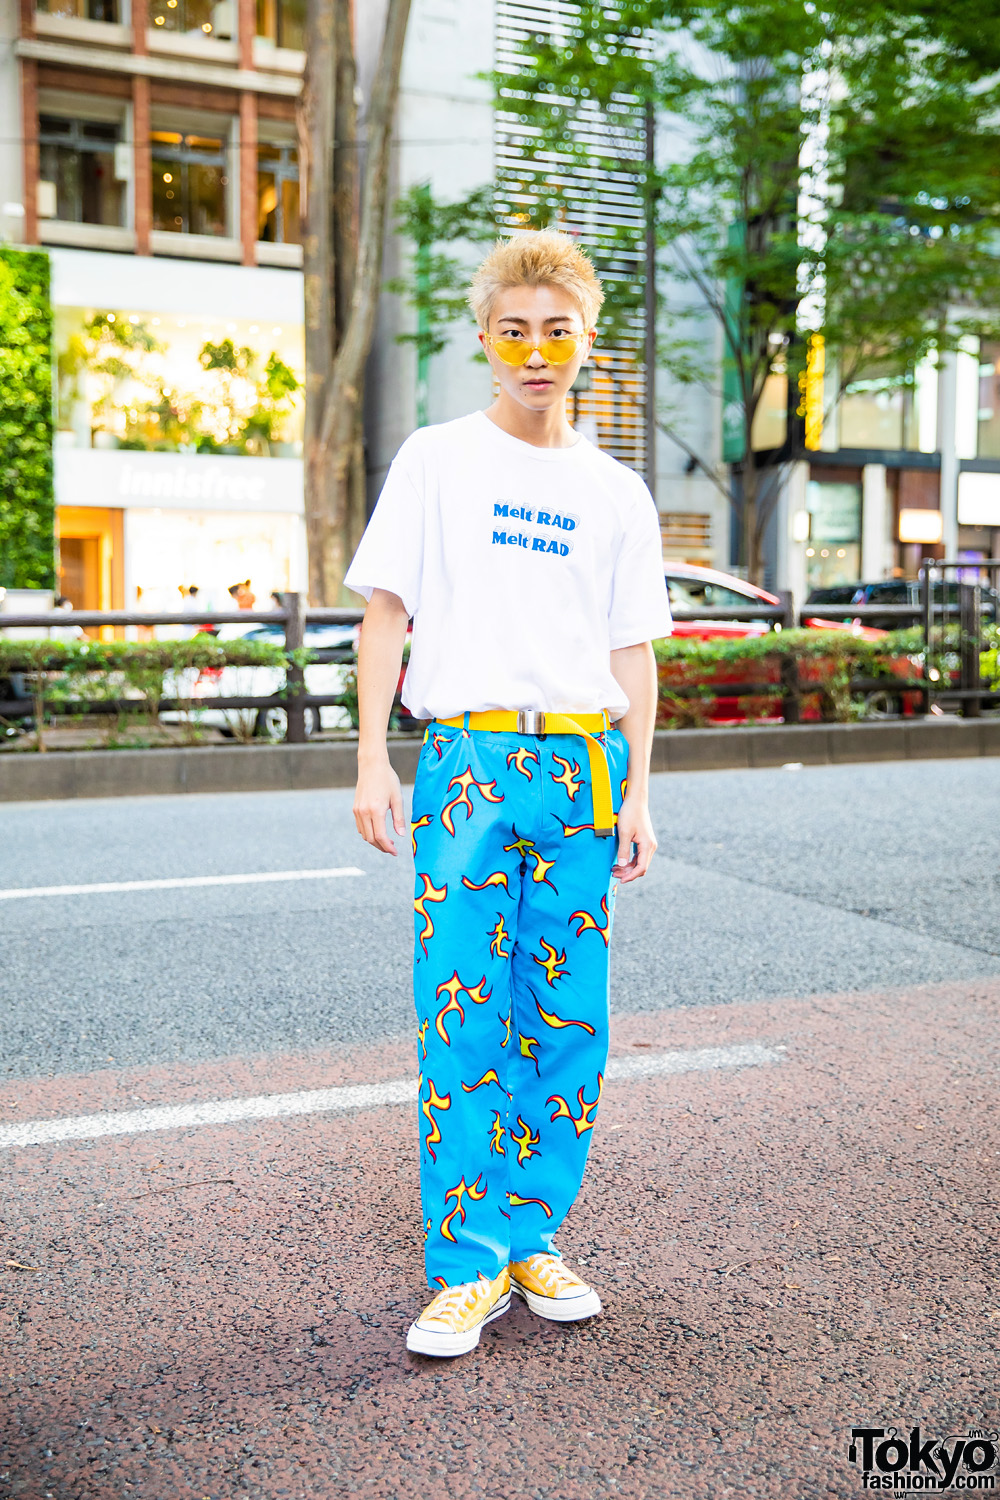 Harajuku Guy in Casual Street Style w/ White Printed Melt RAD Shirt, Golf Wang Flame Pants, Yellow Belt & Converse Sneakers